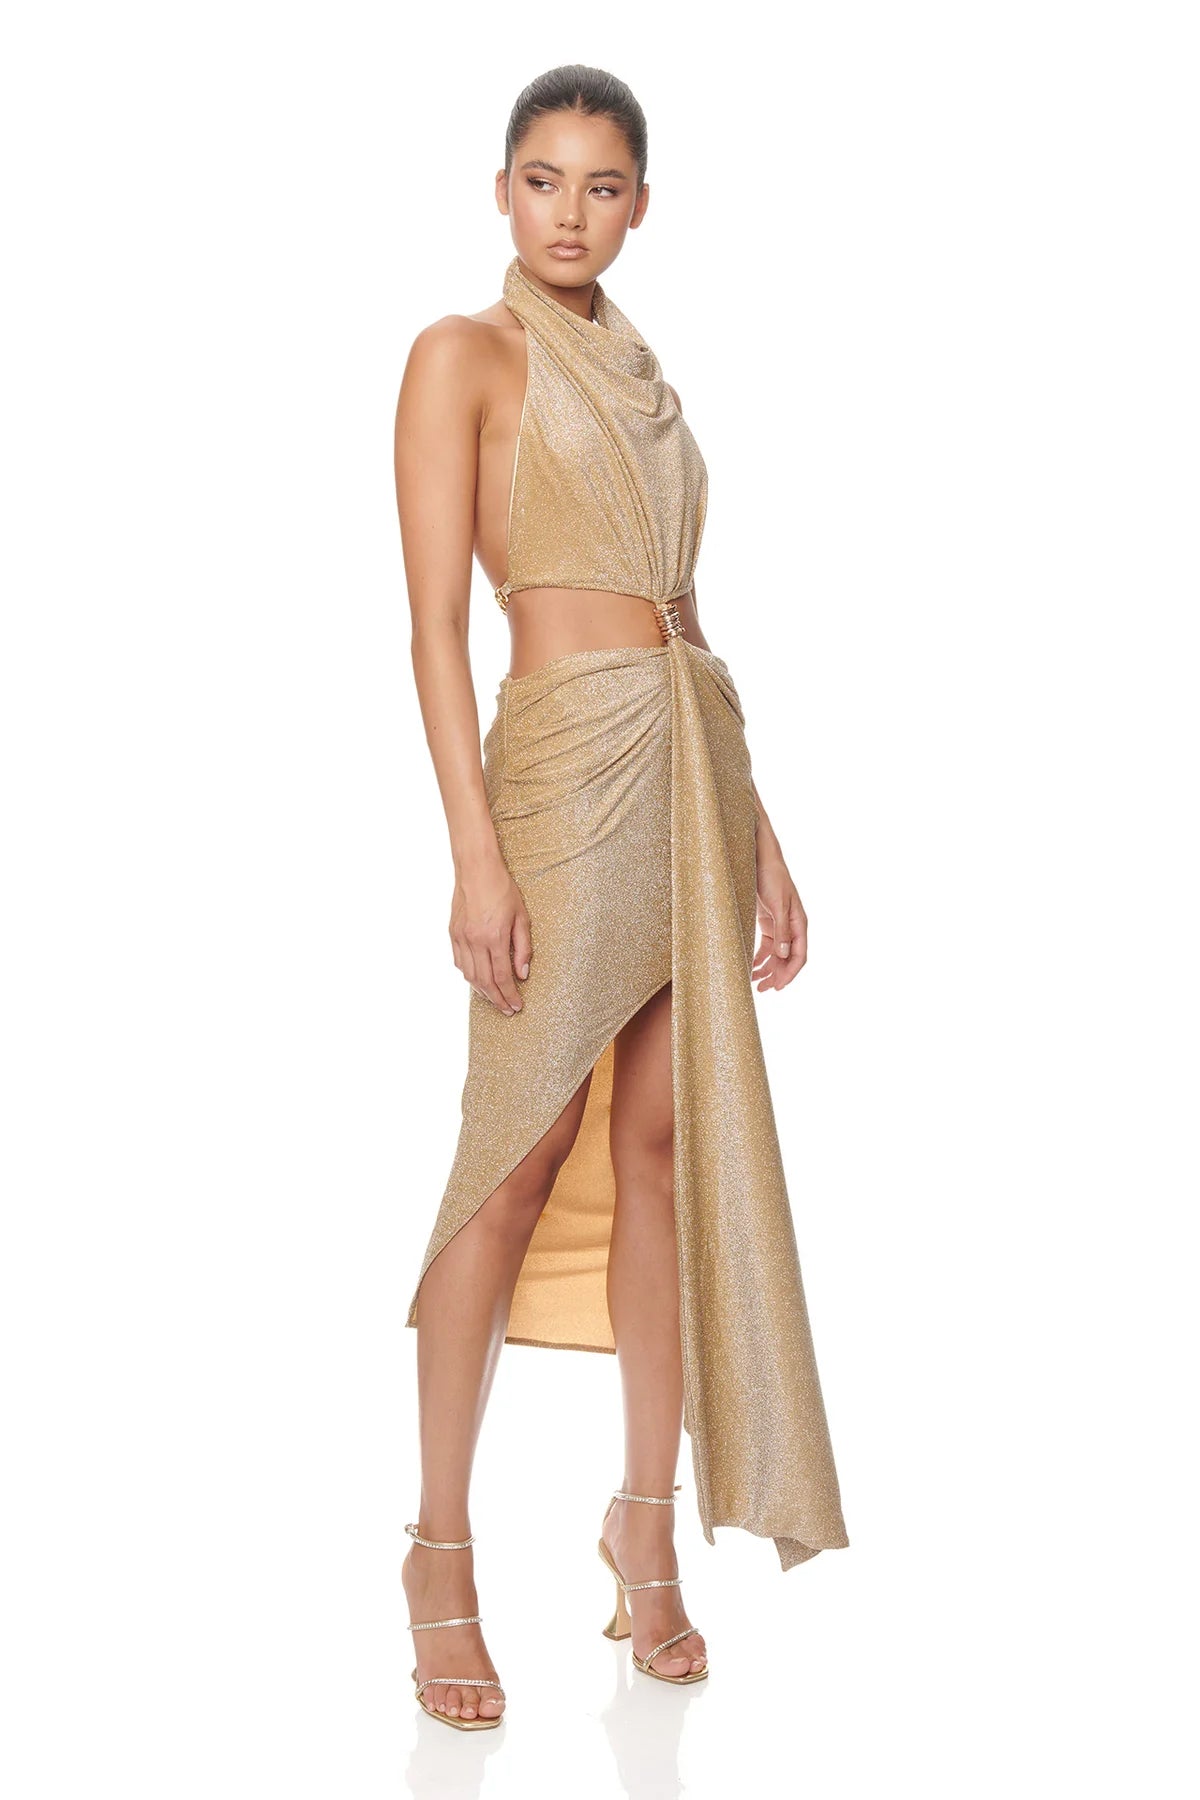 Eliya The Label | Aphrodite Dress